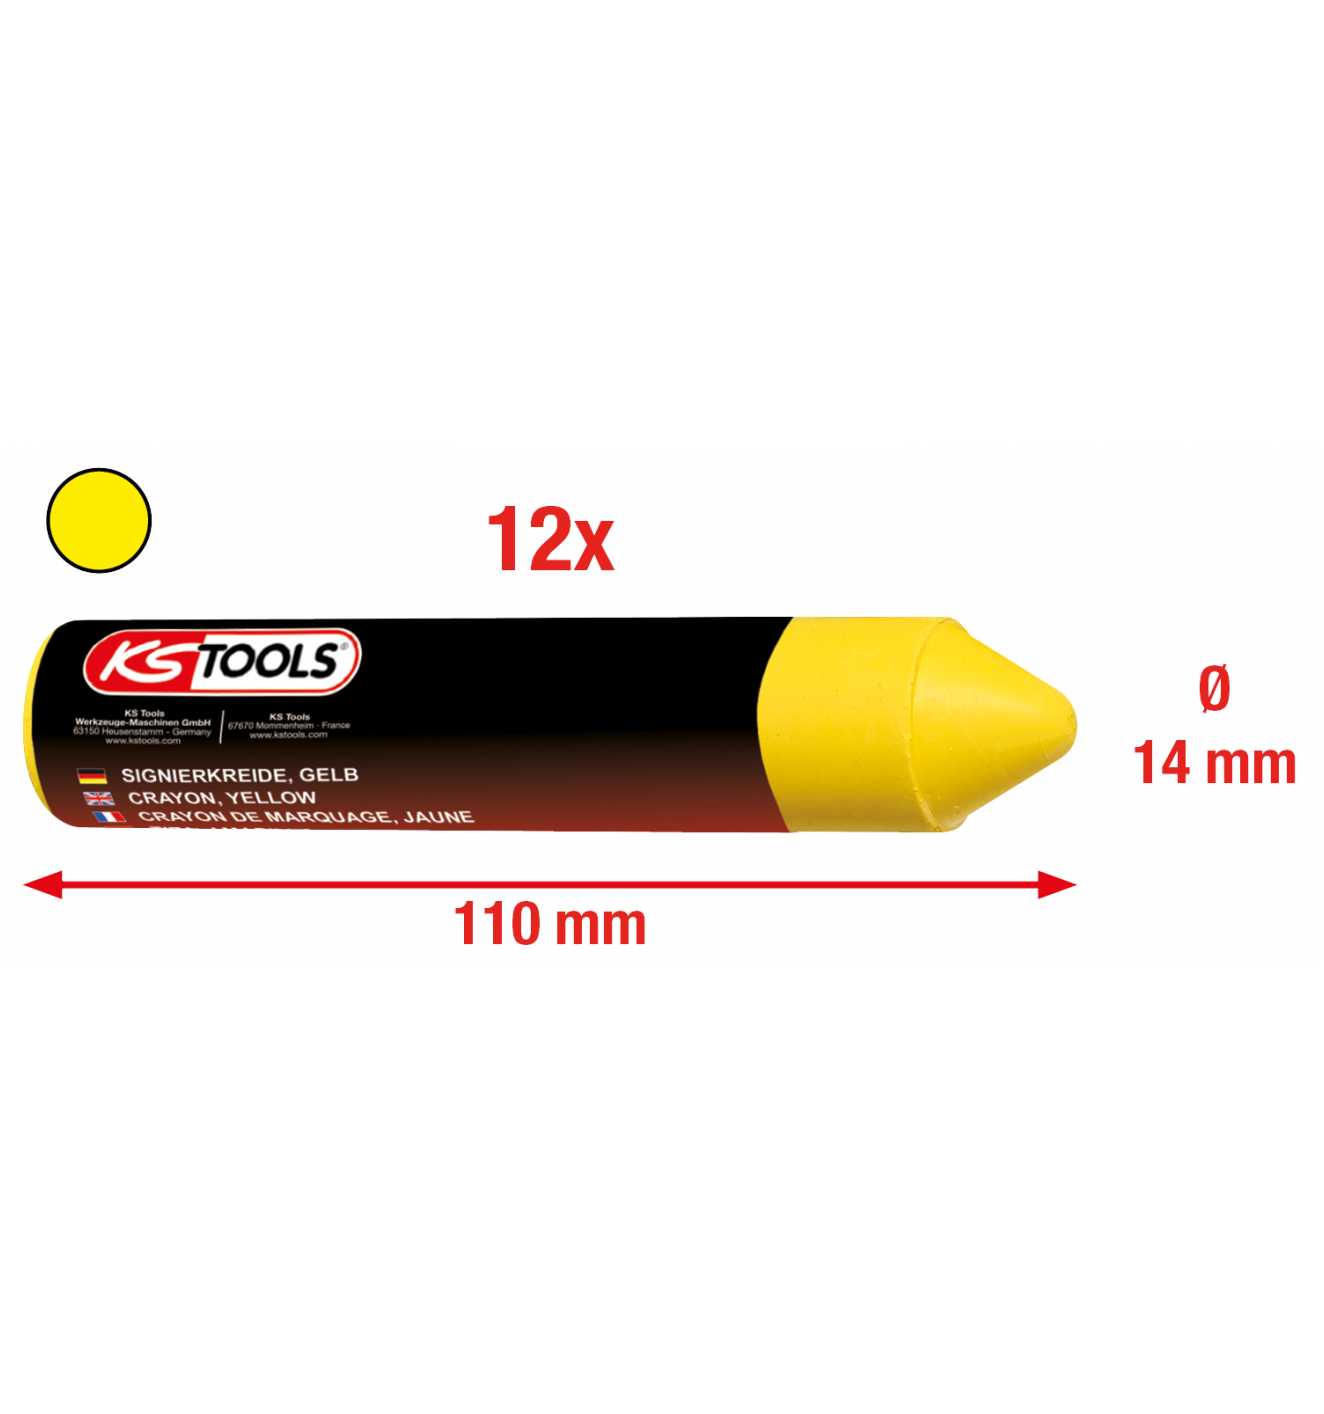 KS Tools Signierkreide, gelb,12er Pack - 4